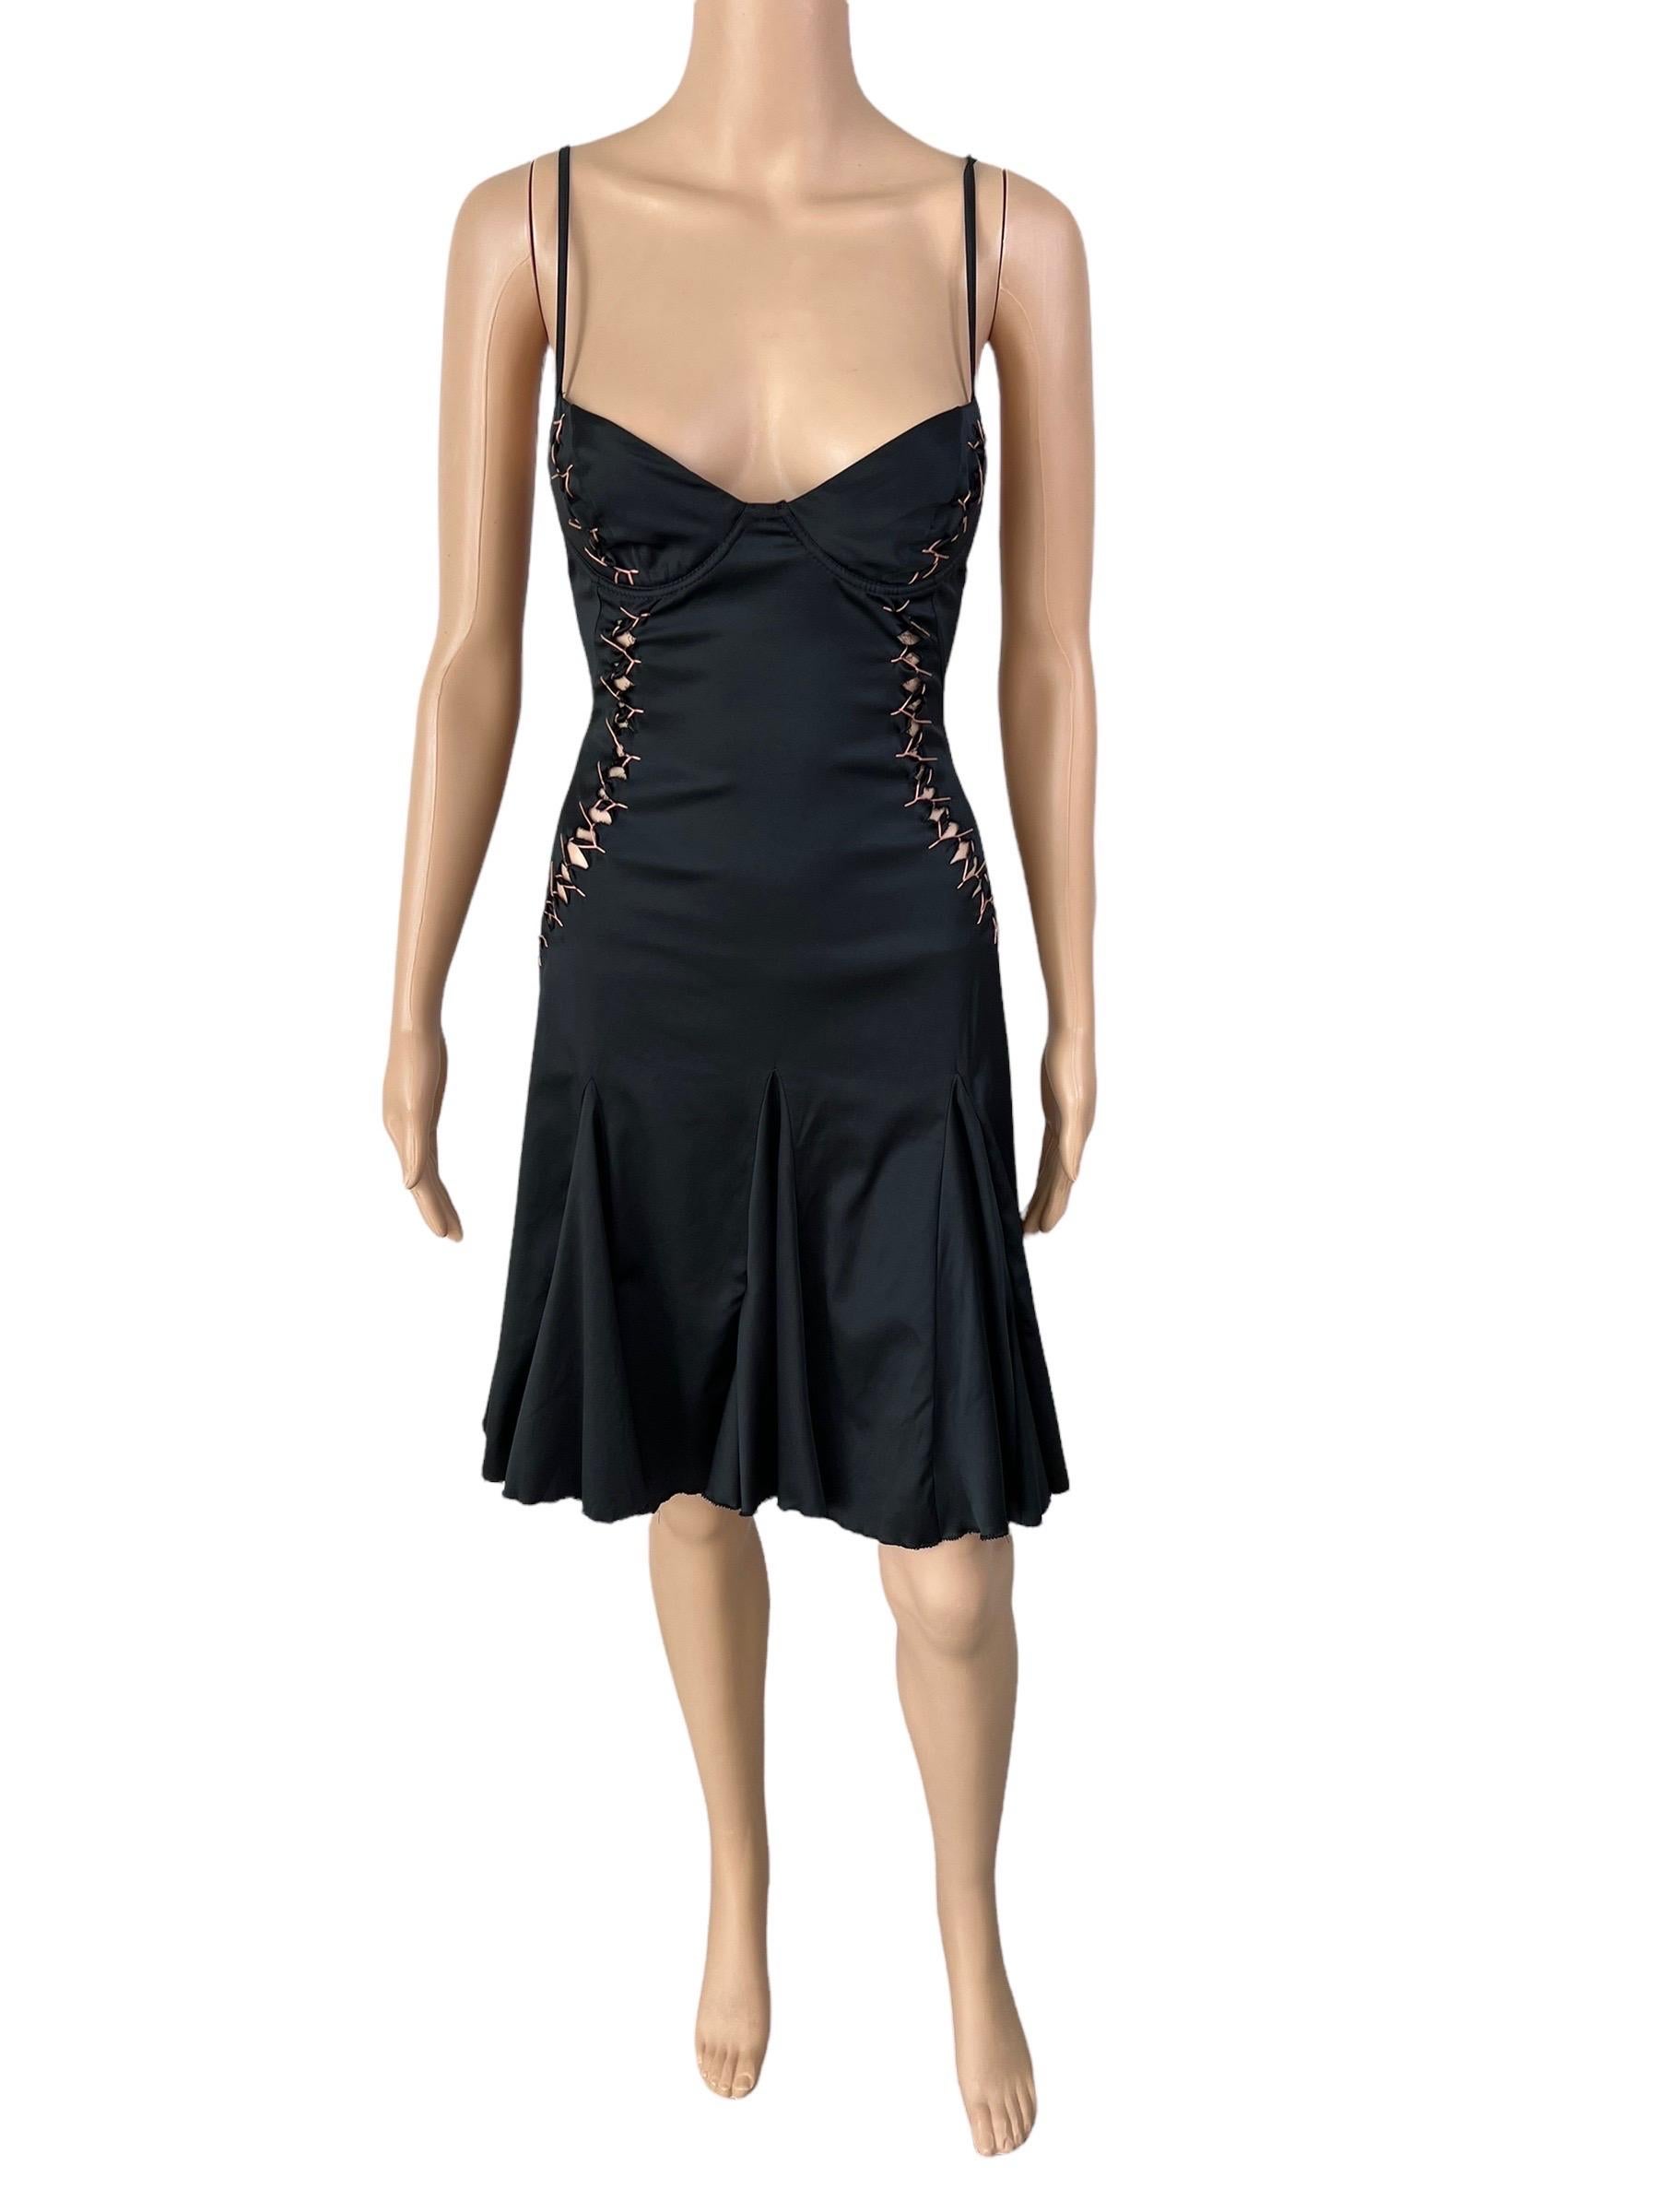 Roberto Cavalli Just Cavalli Lace Up Cutout Bustier Black Mini Dress For Sale 3